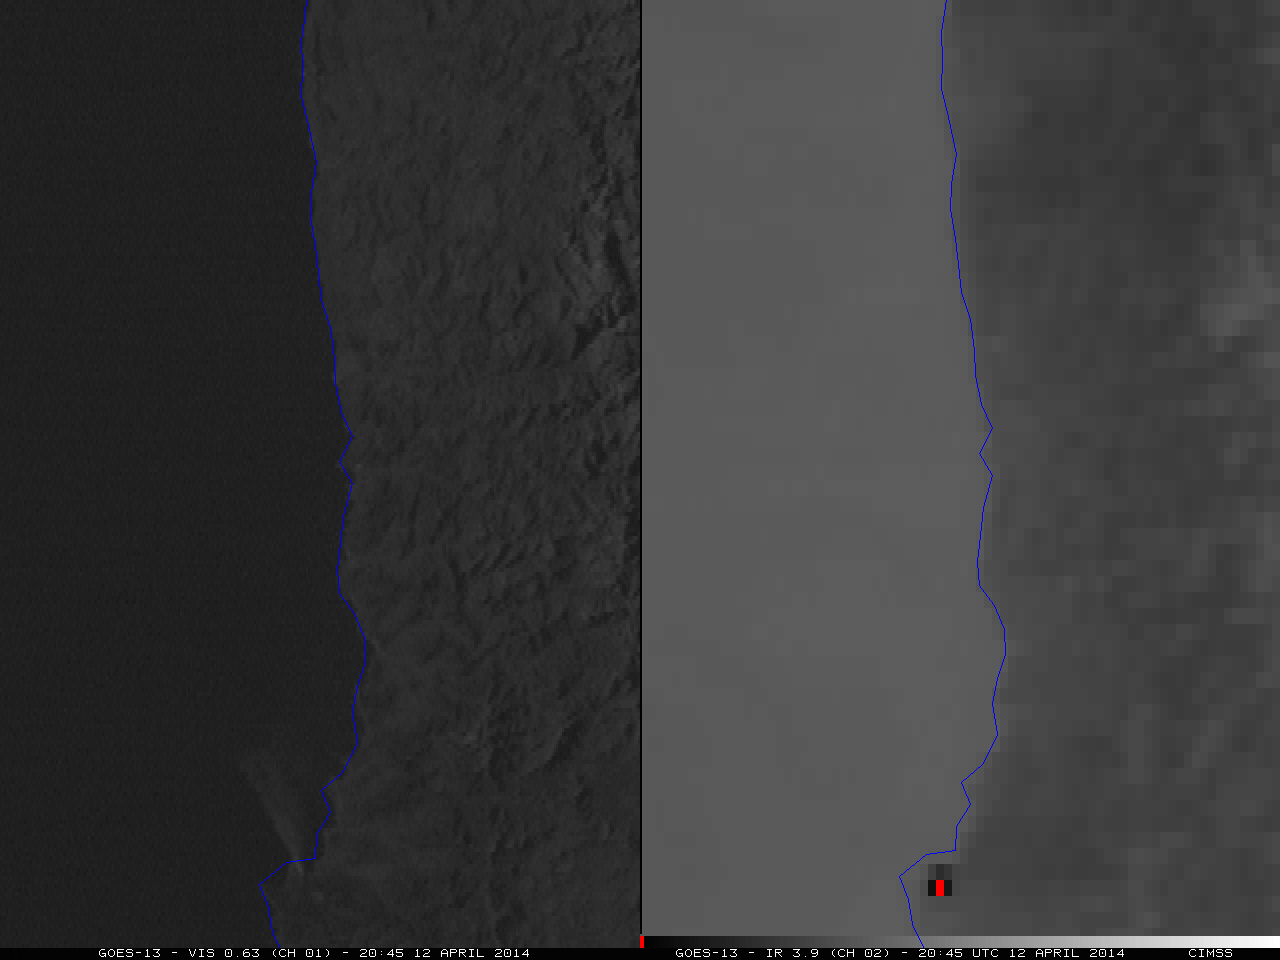 GOES-13 0.63 Âµm visible channel (left) and 3.9 Âµm shortwave channel images (right)